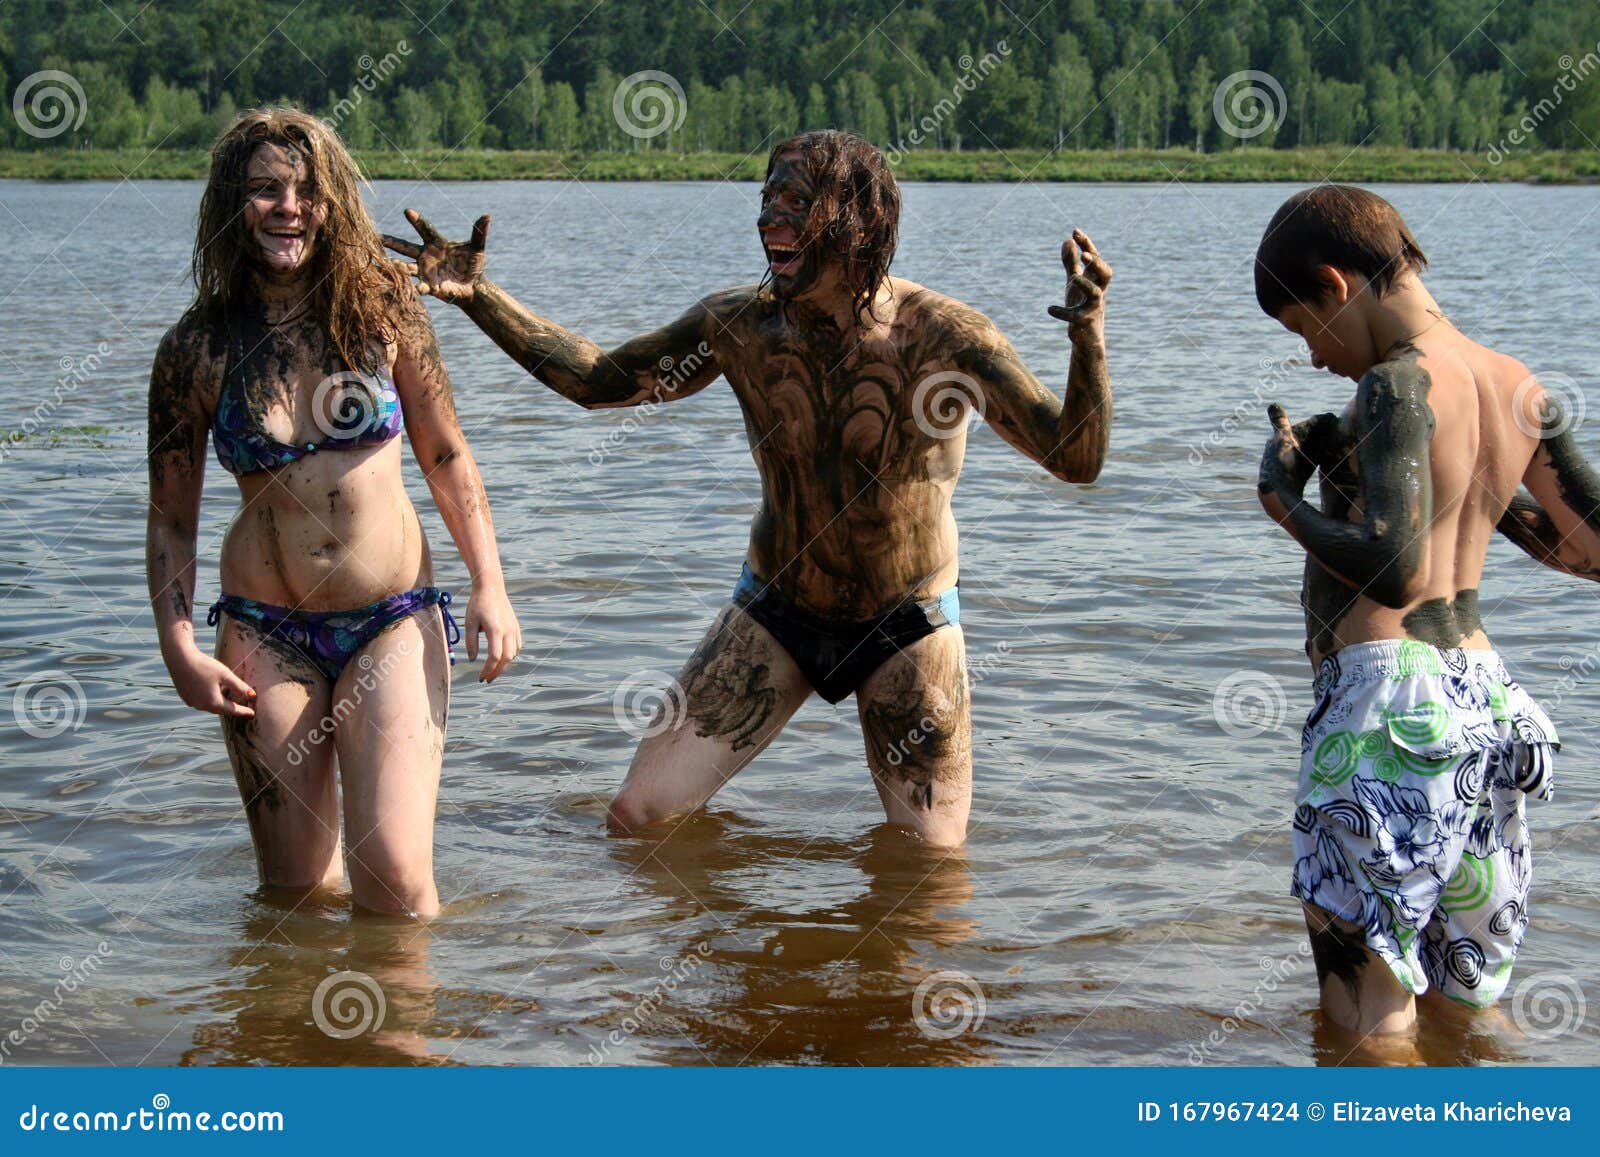 akshay patidar share ukraine nudist families photos